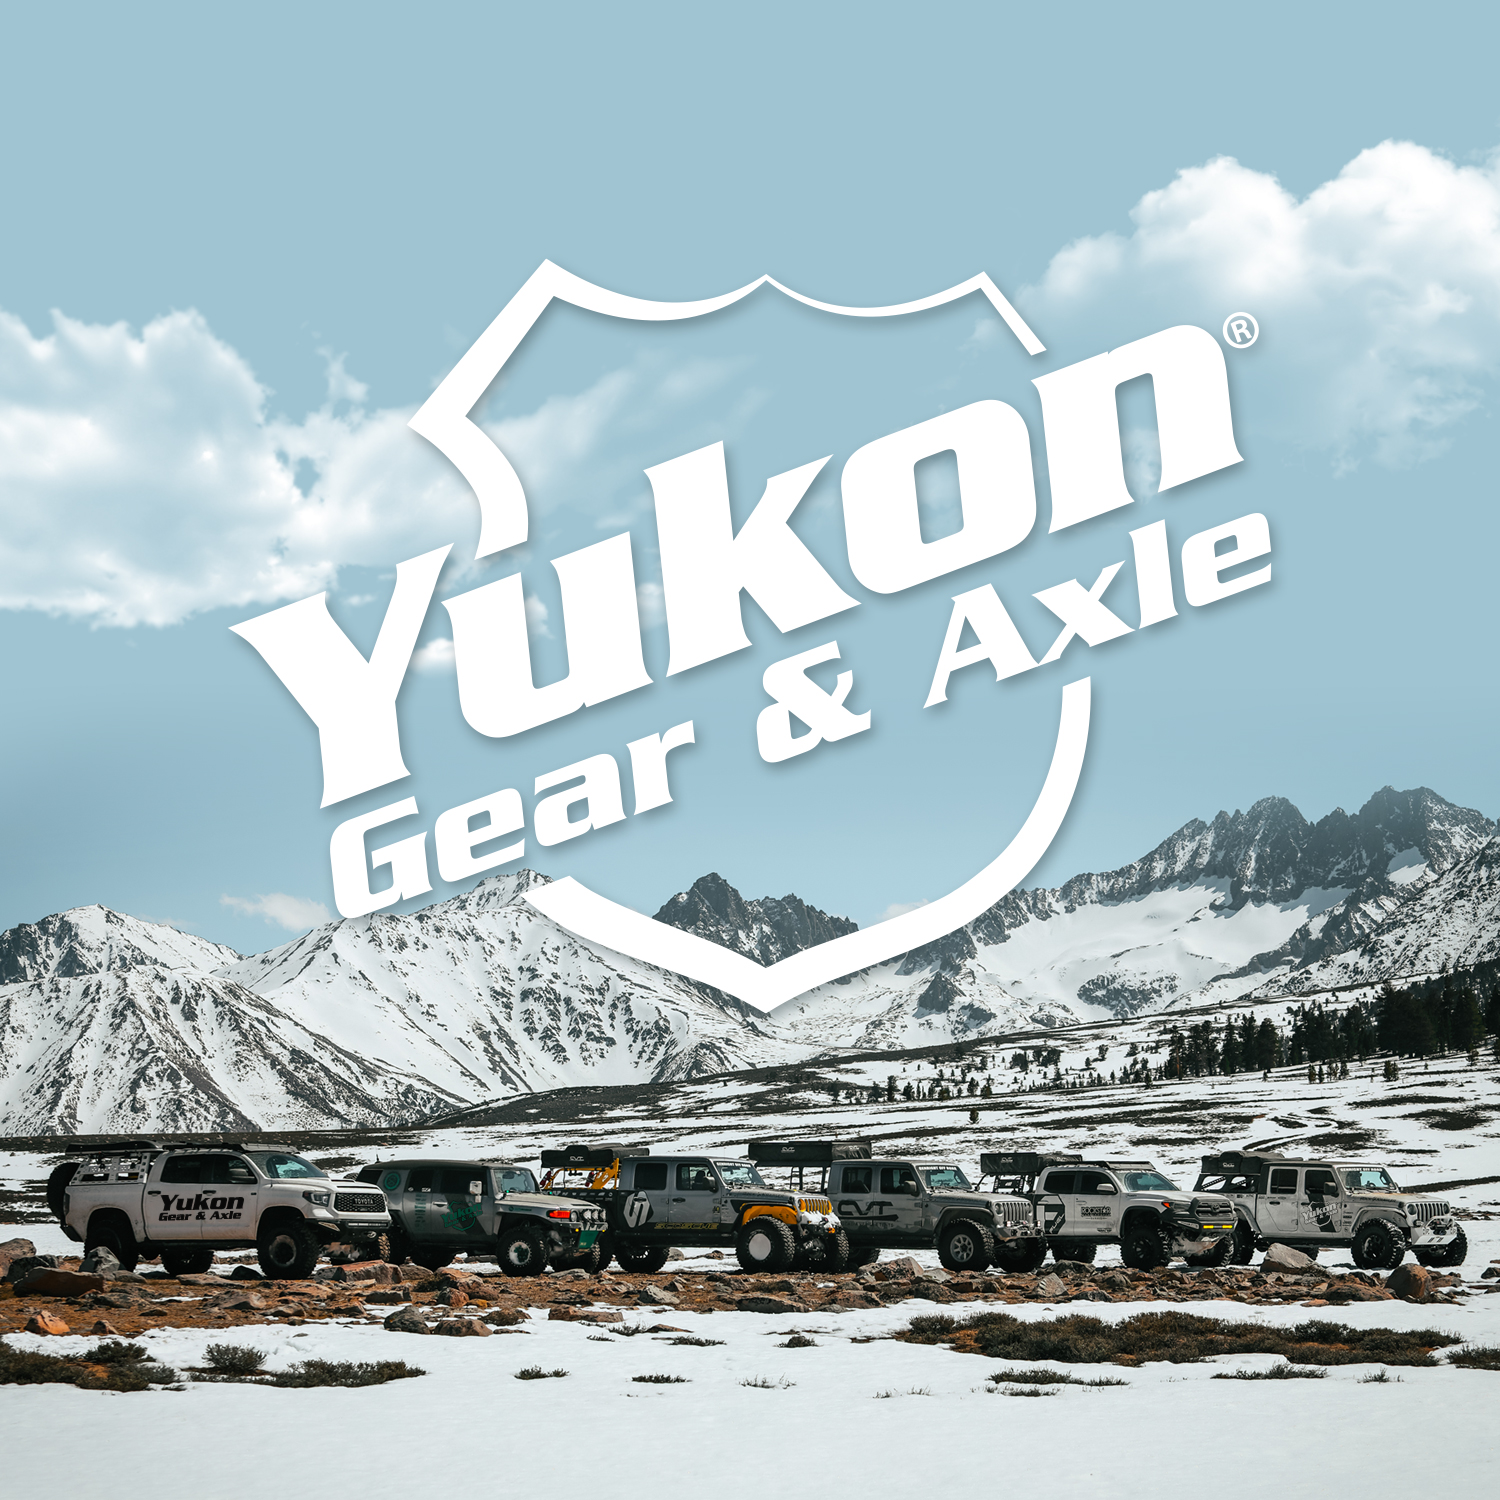 Yukon Minor install kit for Dana 44 differential for new JK, non-Rubicon 